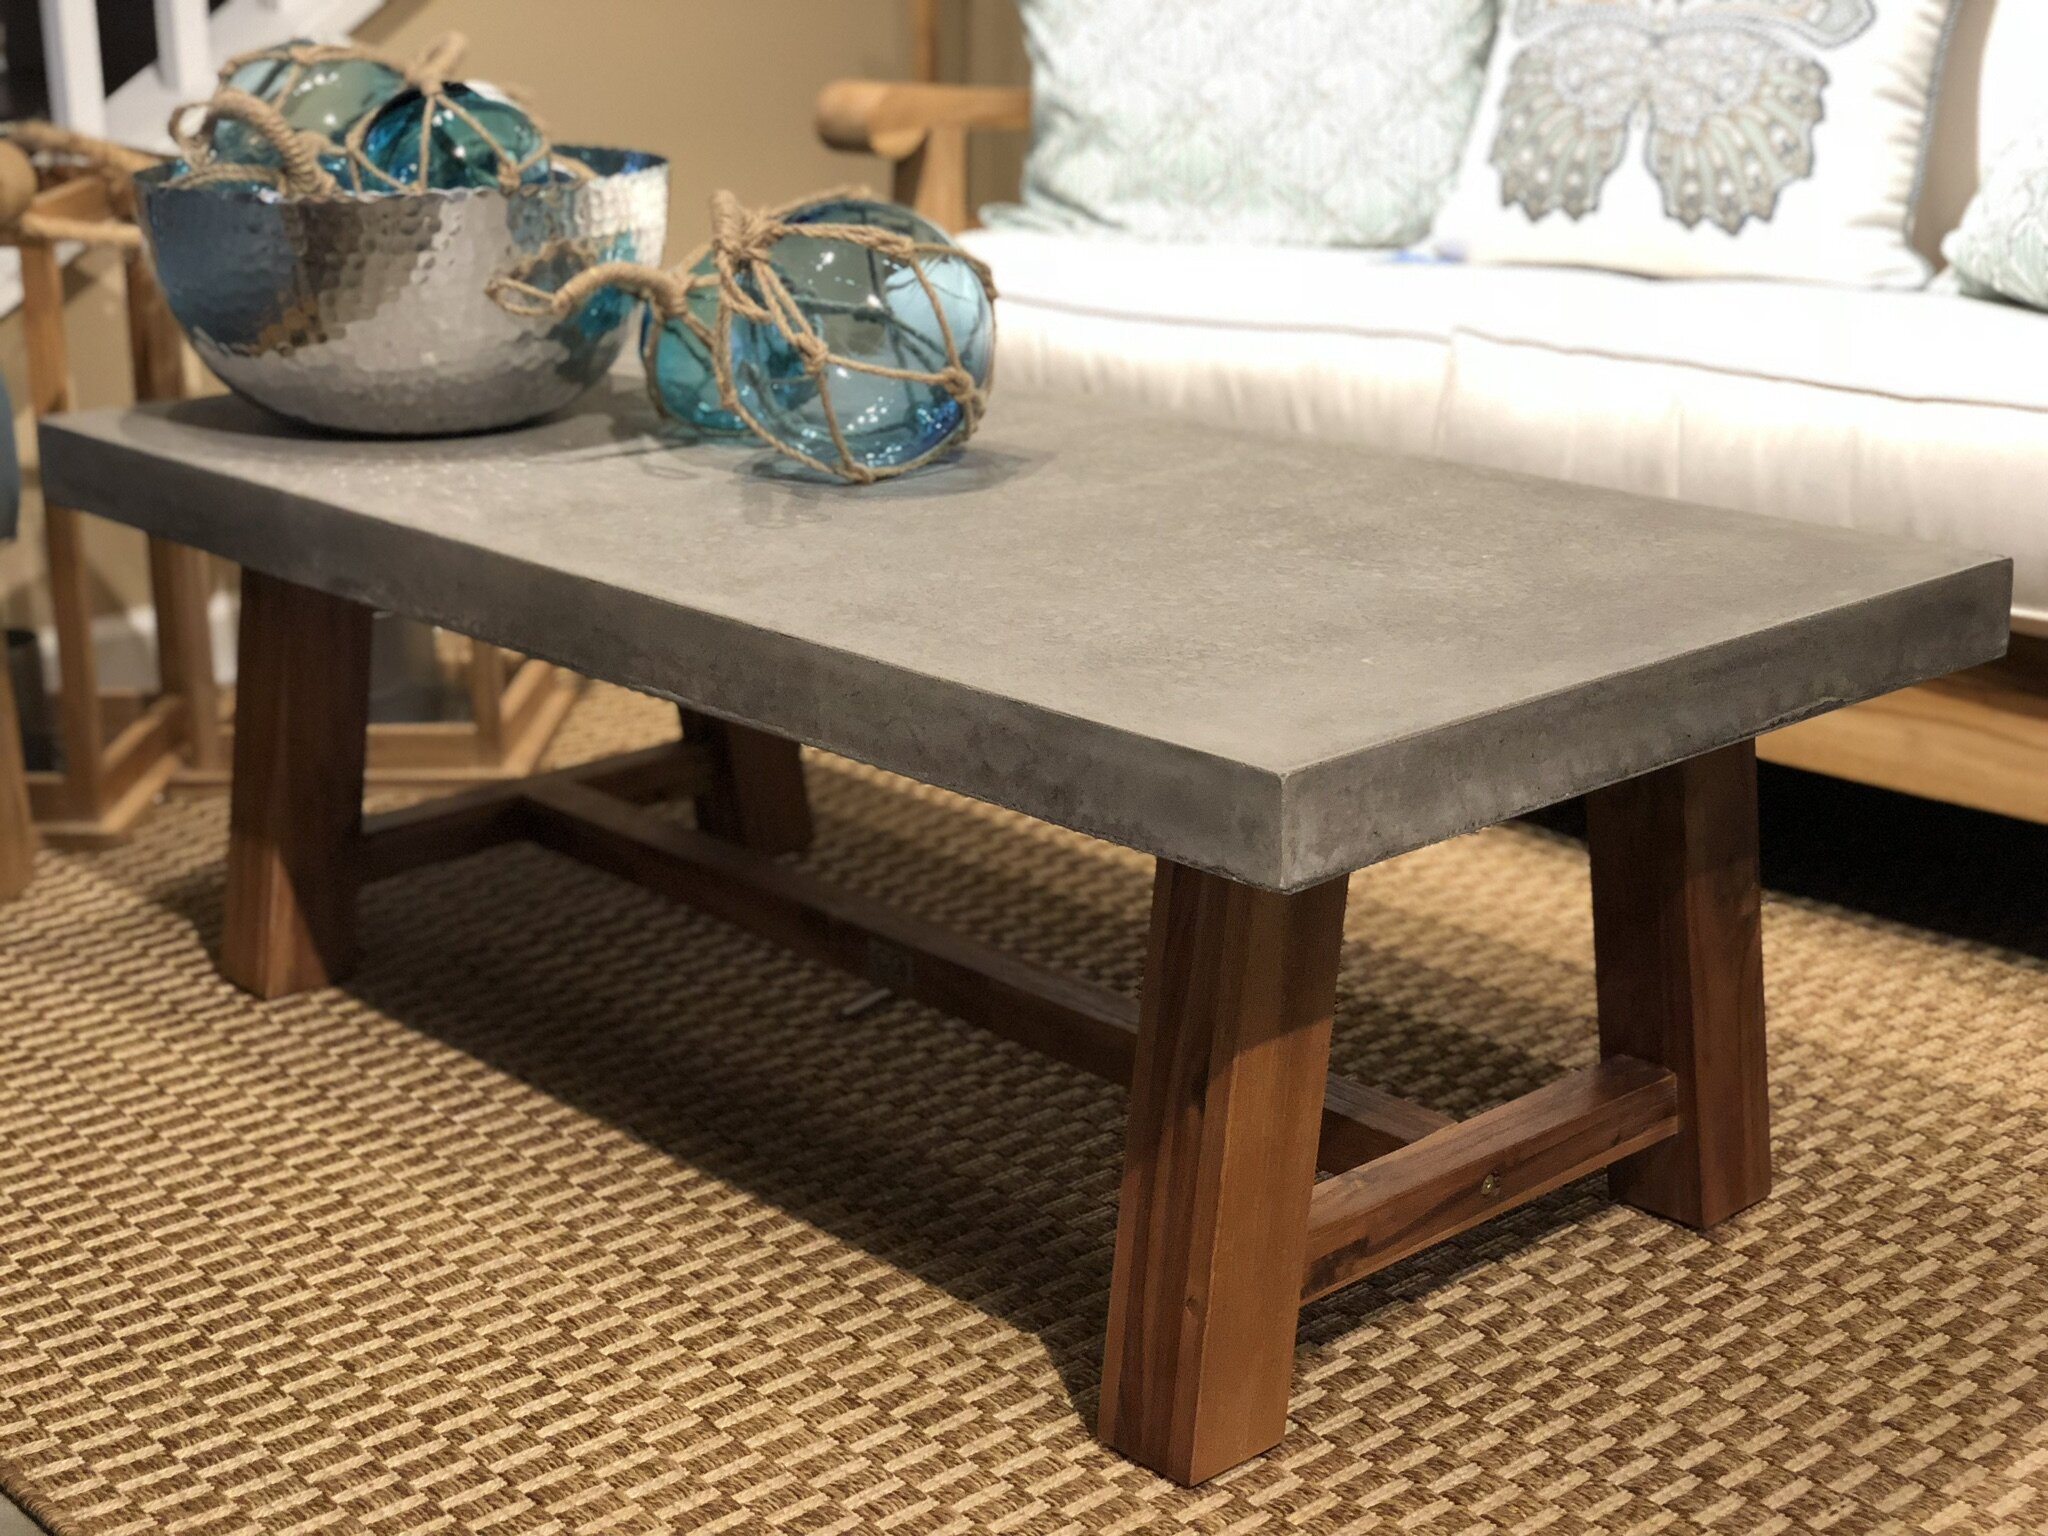 Foundry Select Colegrove Stone Concrete Coffee Table Reviews Wayfair